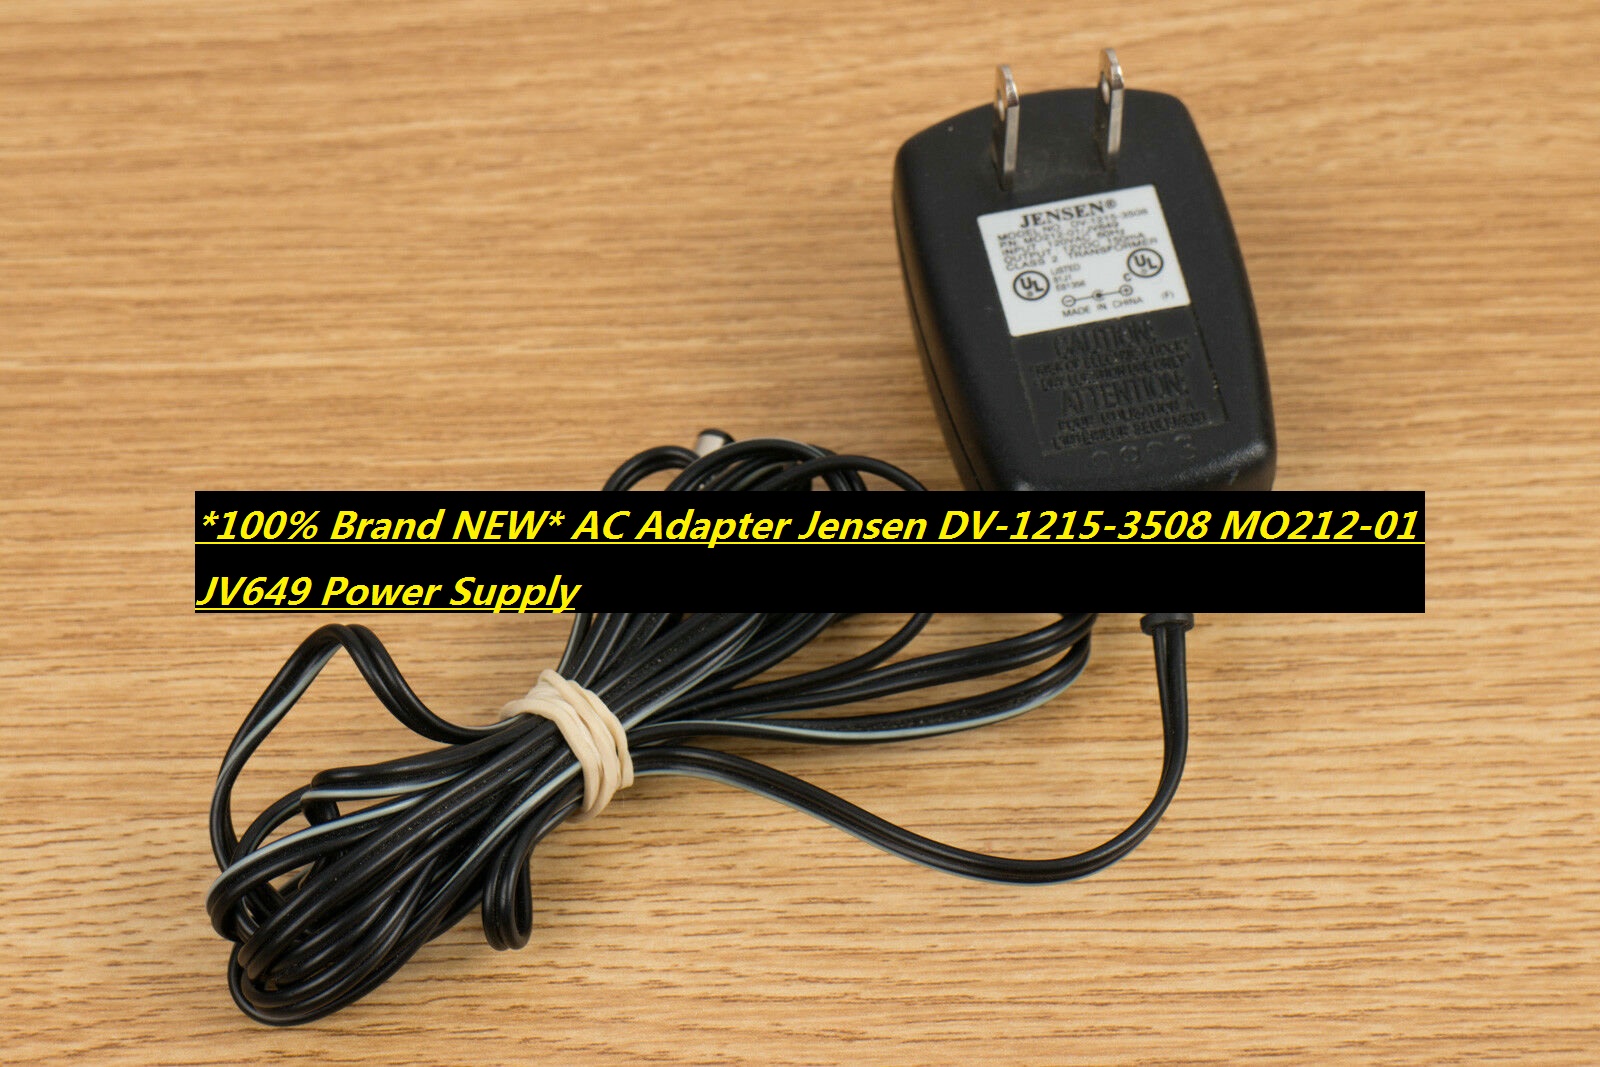 *100% Brand NEW* AC Adapter Jensen DV-1215-3508 MO212-01 JV649 Power Supply